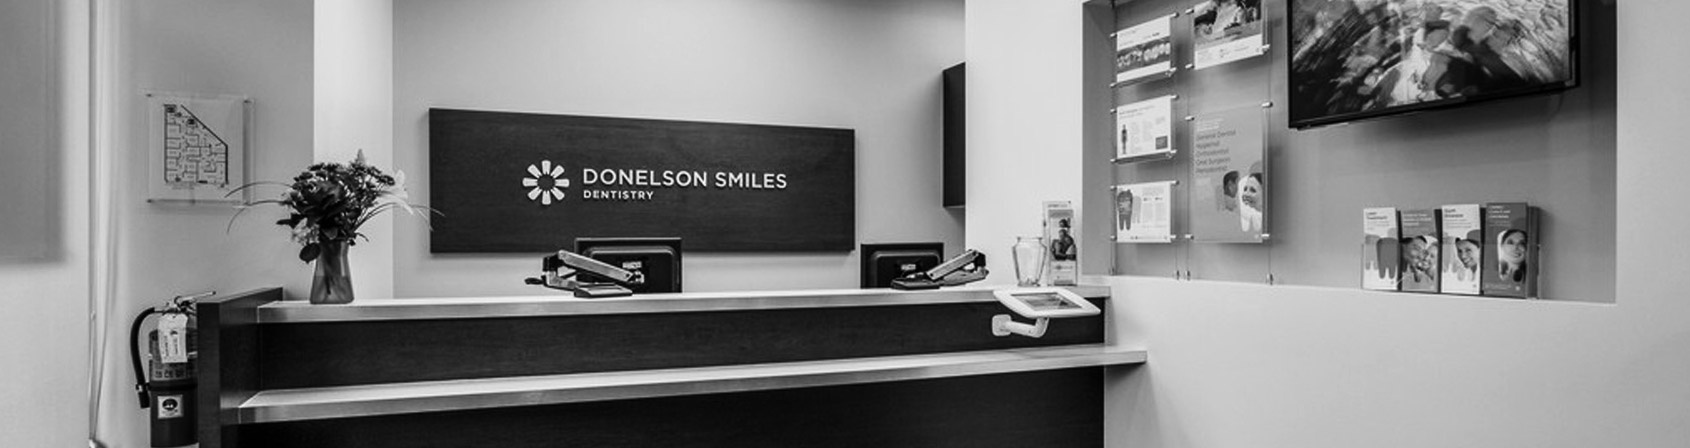 MTLC Donelson Smiles Dentistry